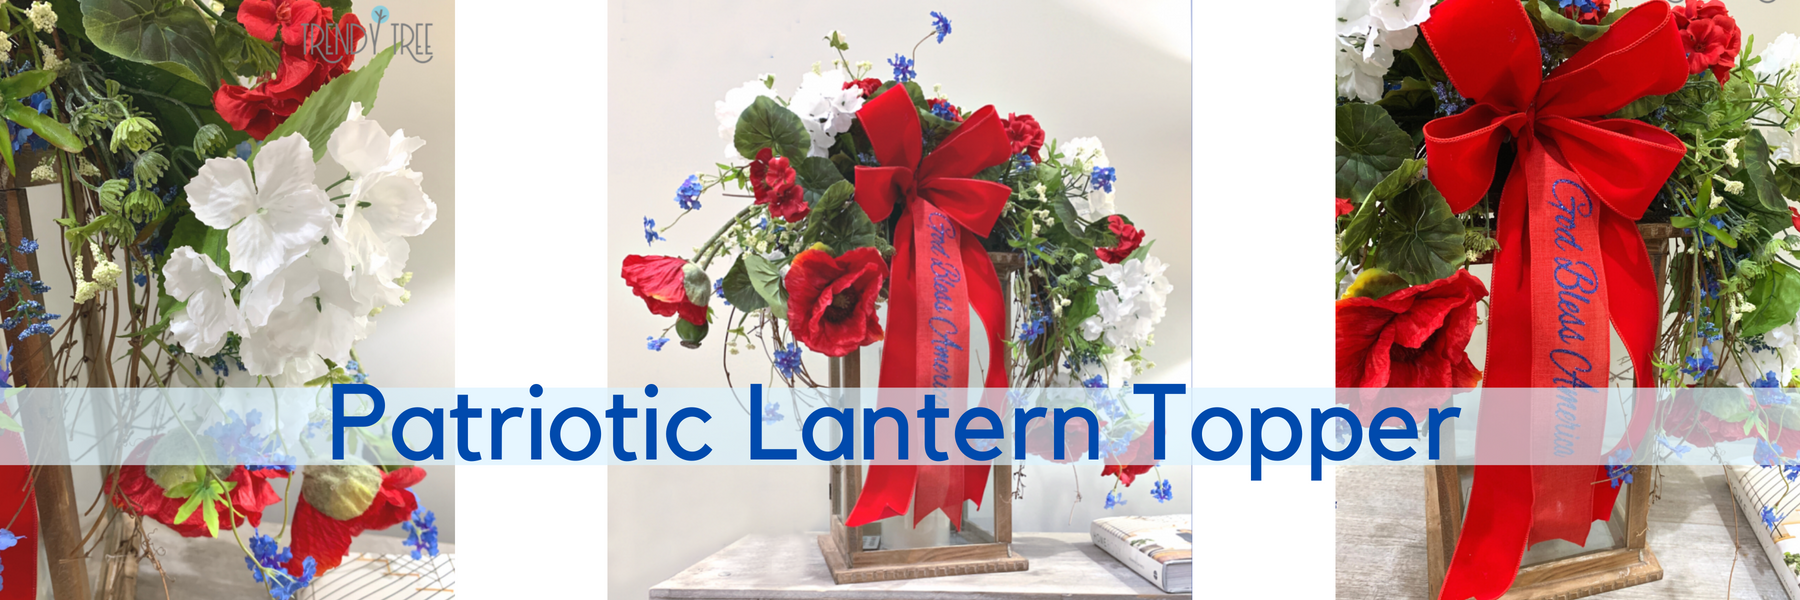 Patriotic Lantern Topper Tutorial